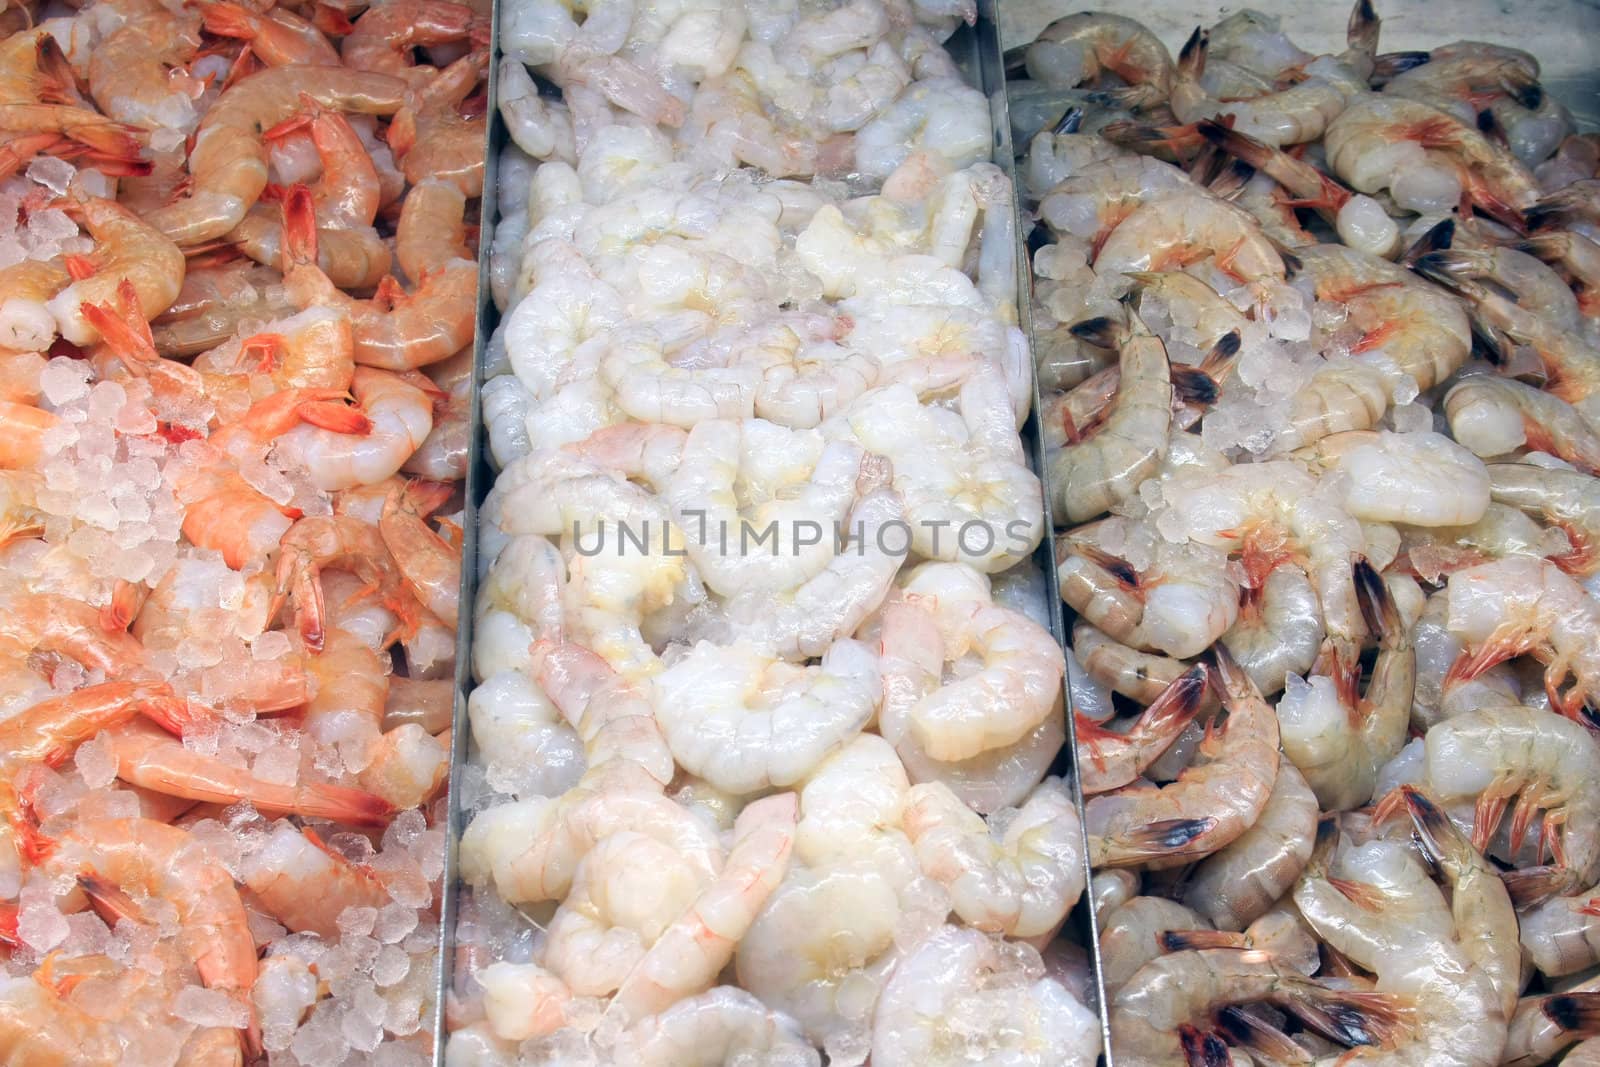 A selection of shrimp at a fish market